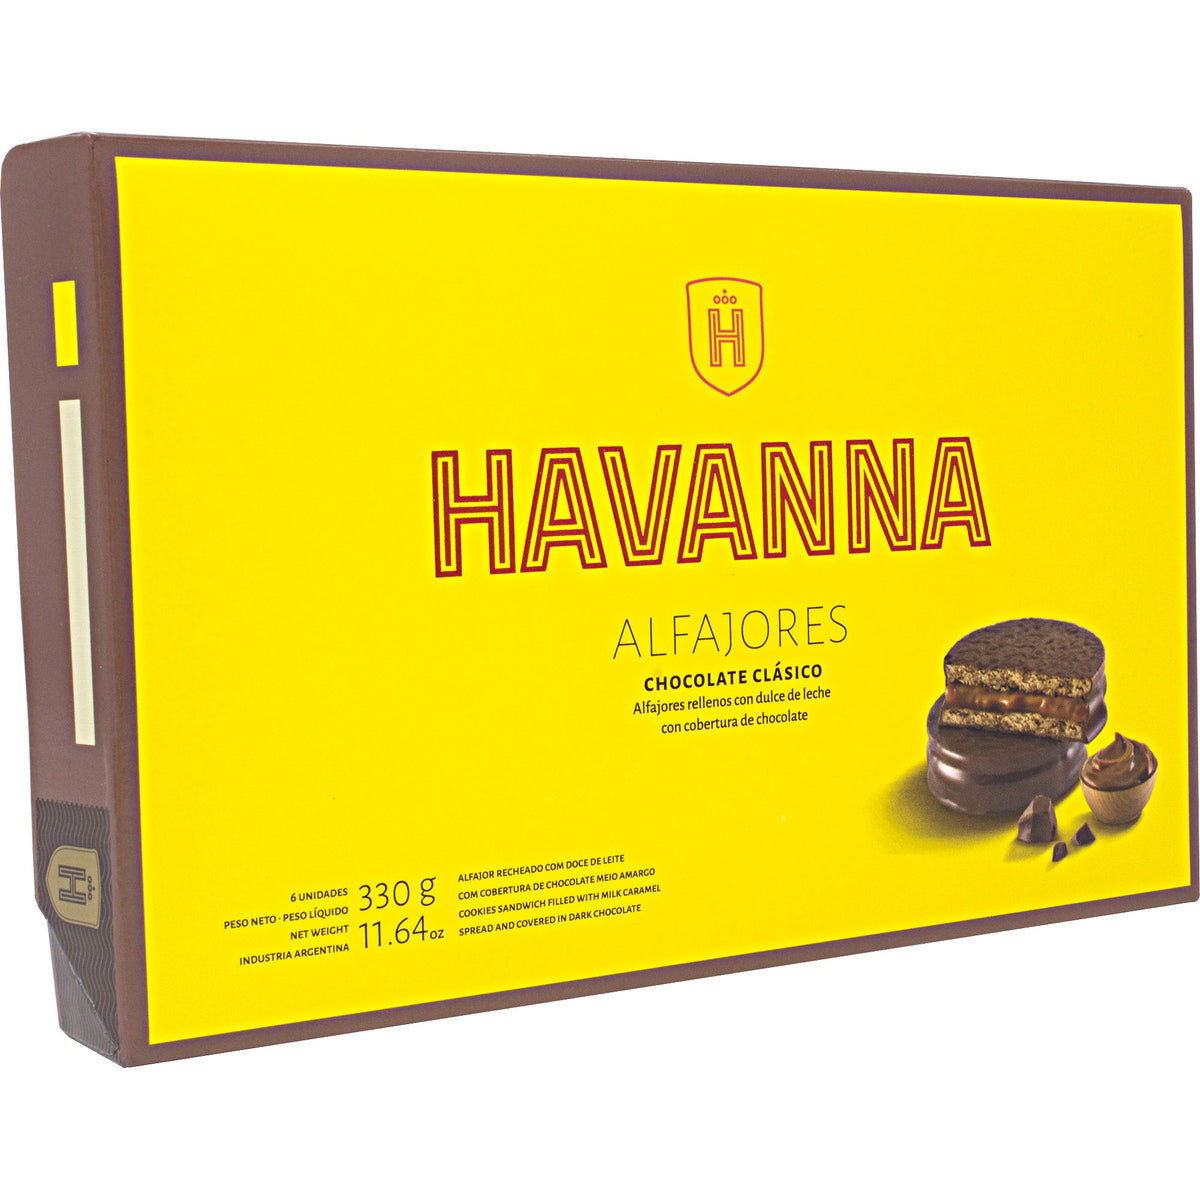 Havanna Alfajores (Classic Chocolate) (Box of 6) - 11.6 oz / 330 g